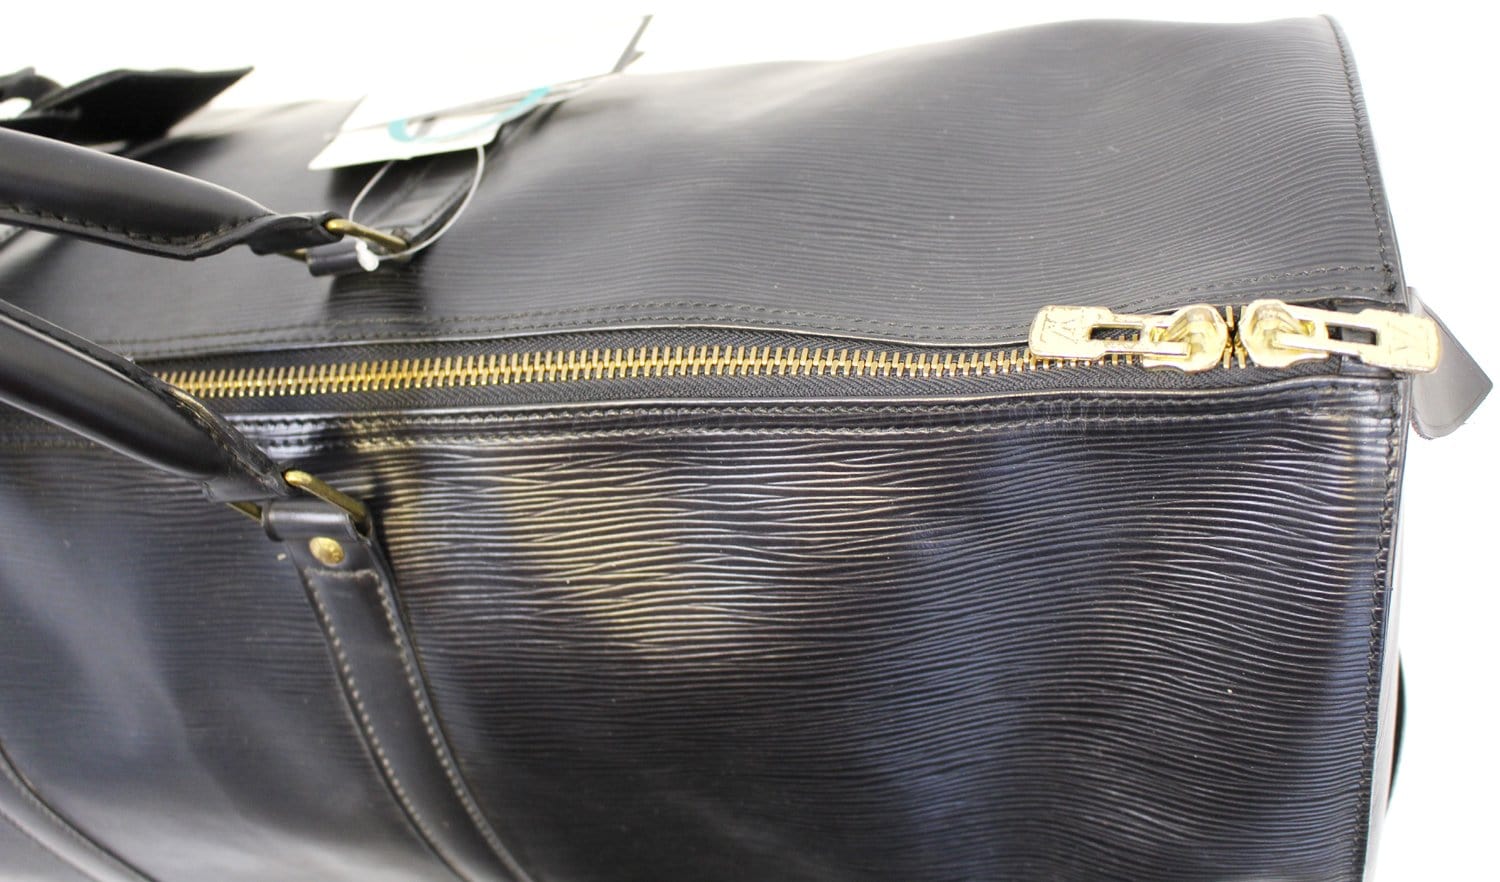 Louis Vuitton, Bags, Louis Vuitton Black Epi Keepall 6